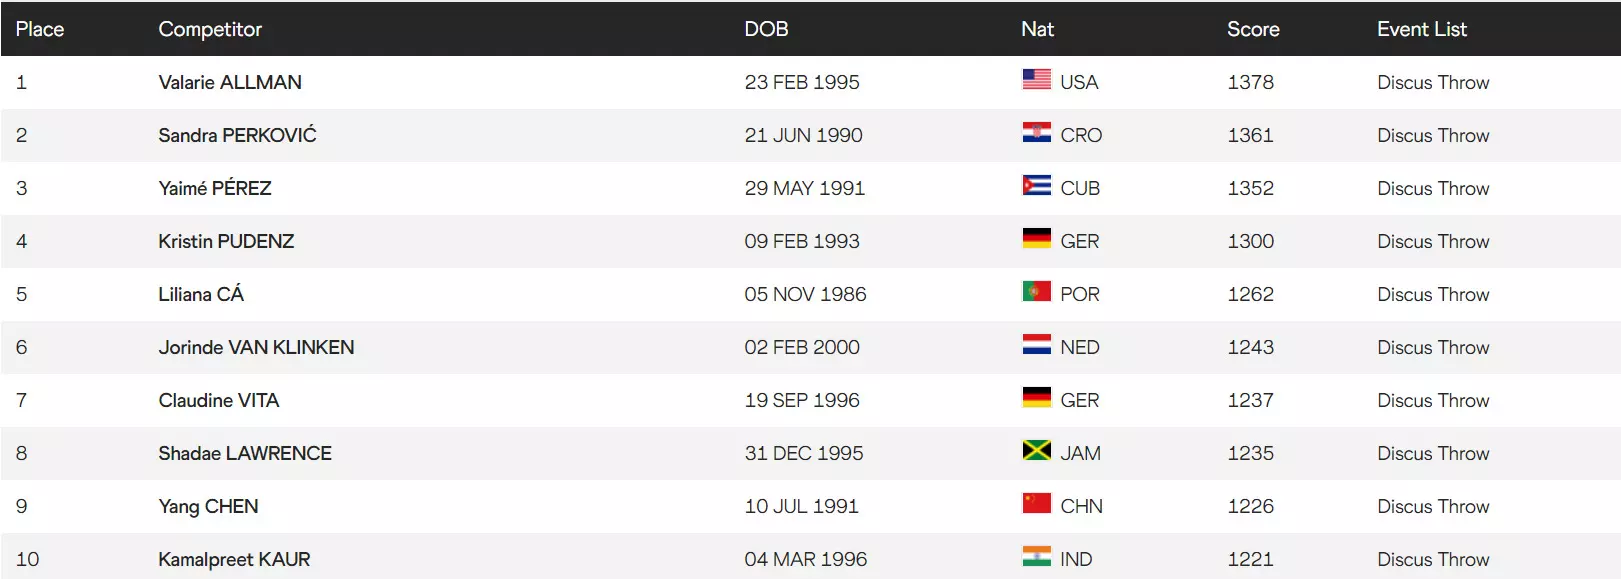 Womens Discus Throw World Rankings (Source: World Athletics)